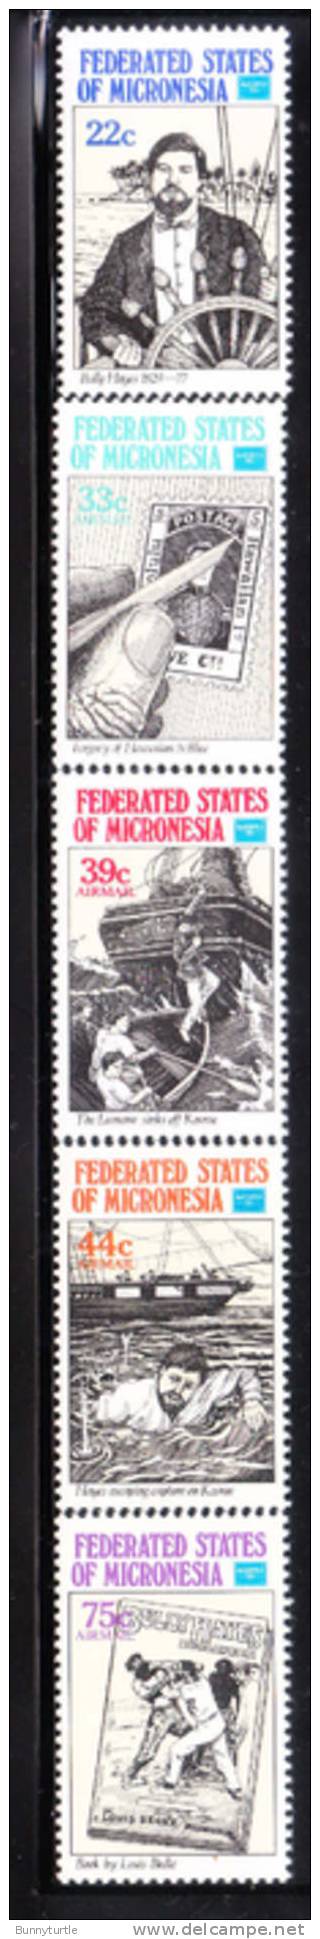 Micronesia 1986 Ameripex Ships Stamp Ship MNH - Micronesia